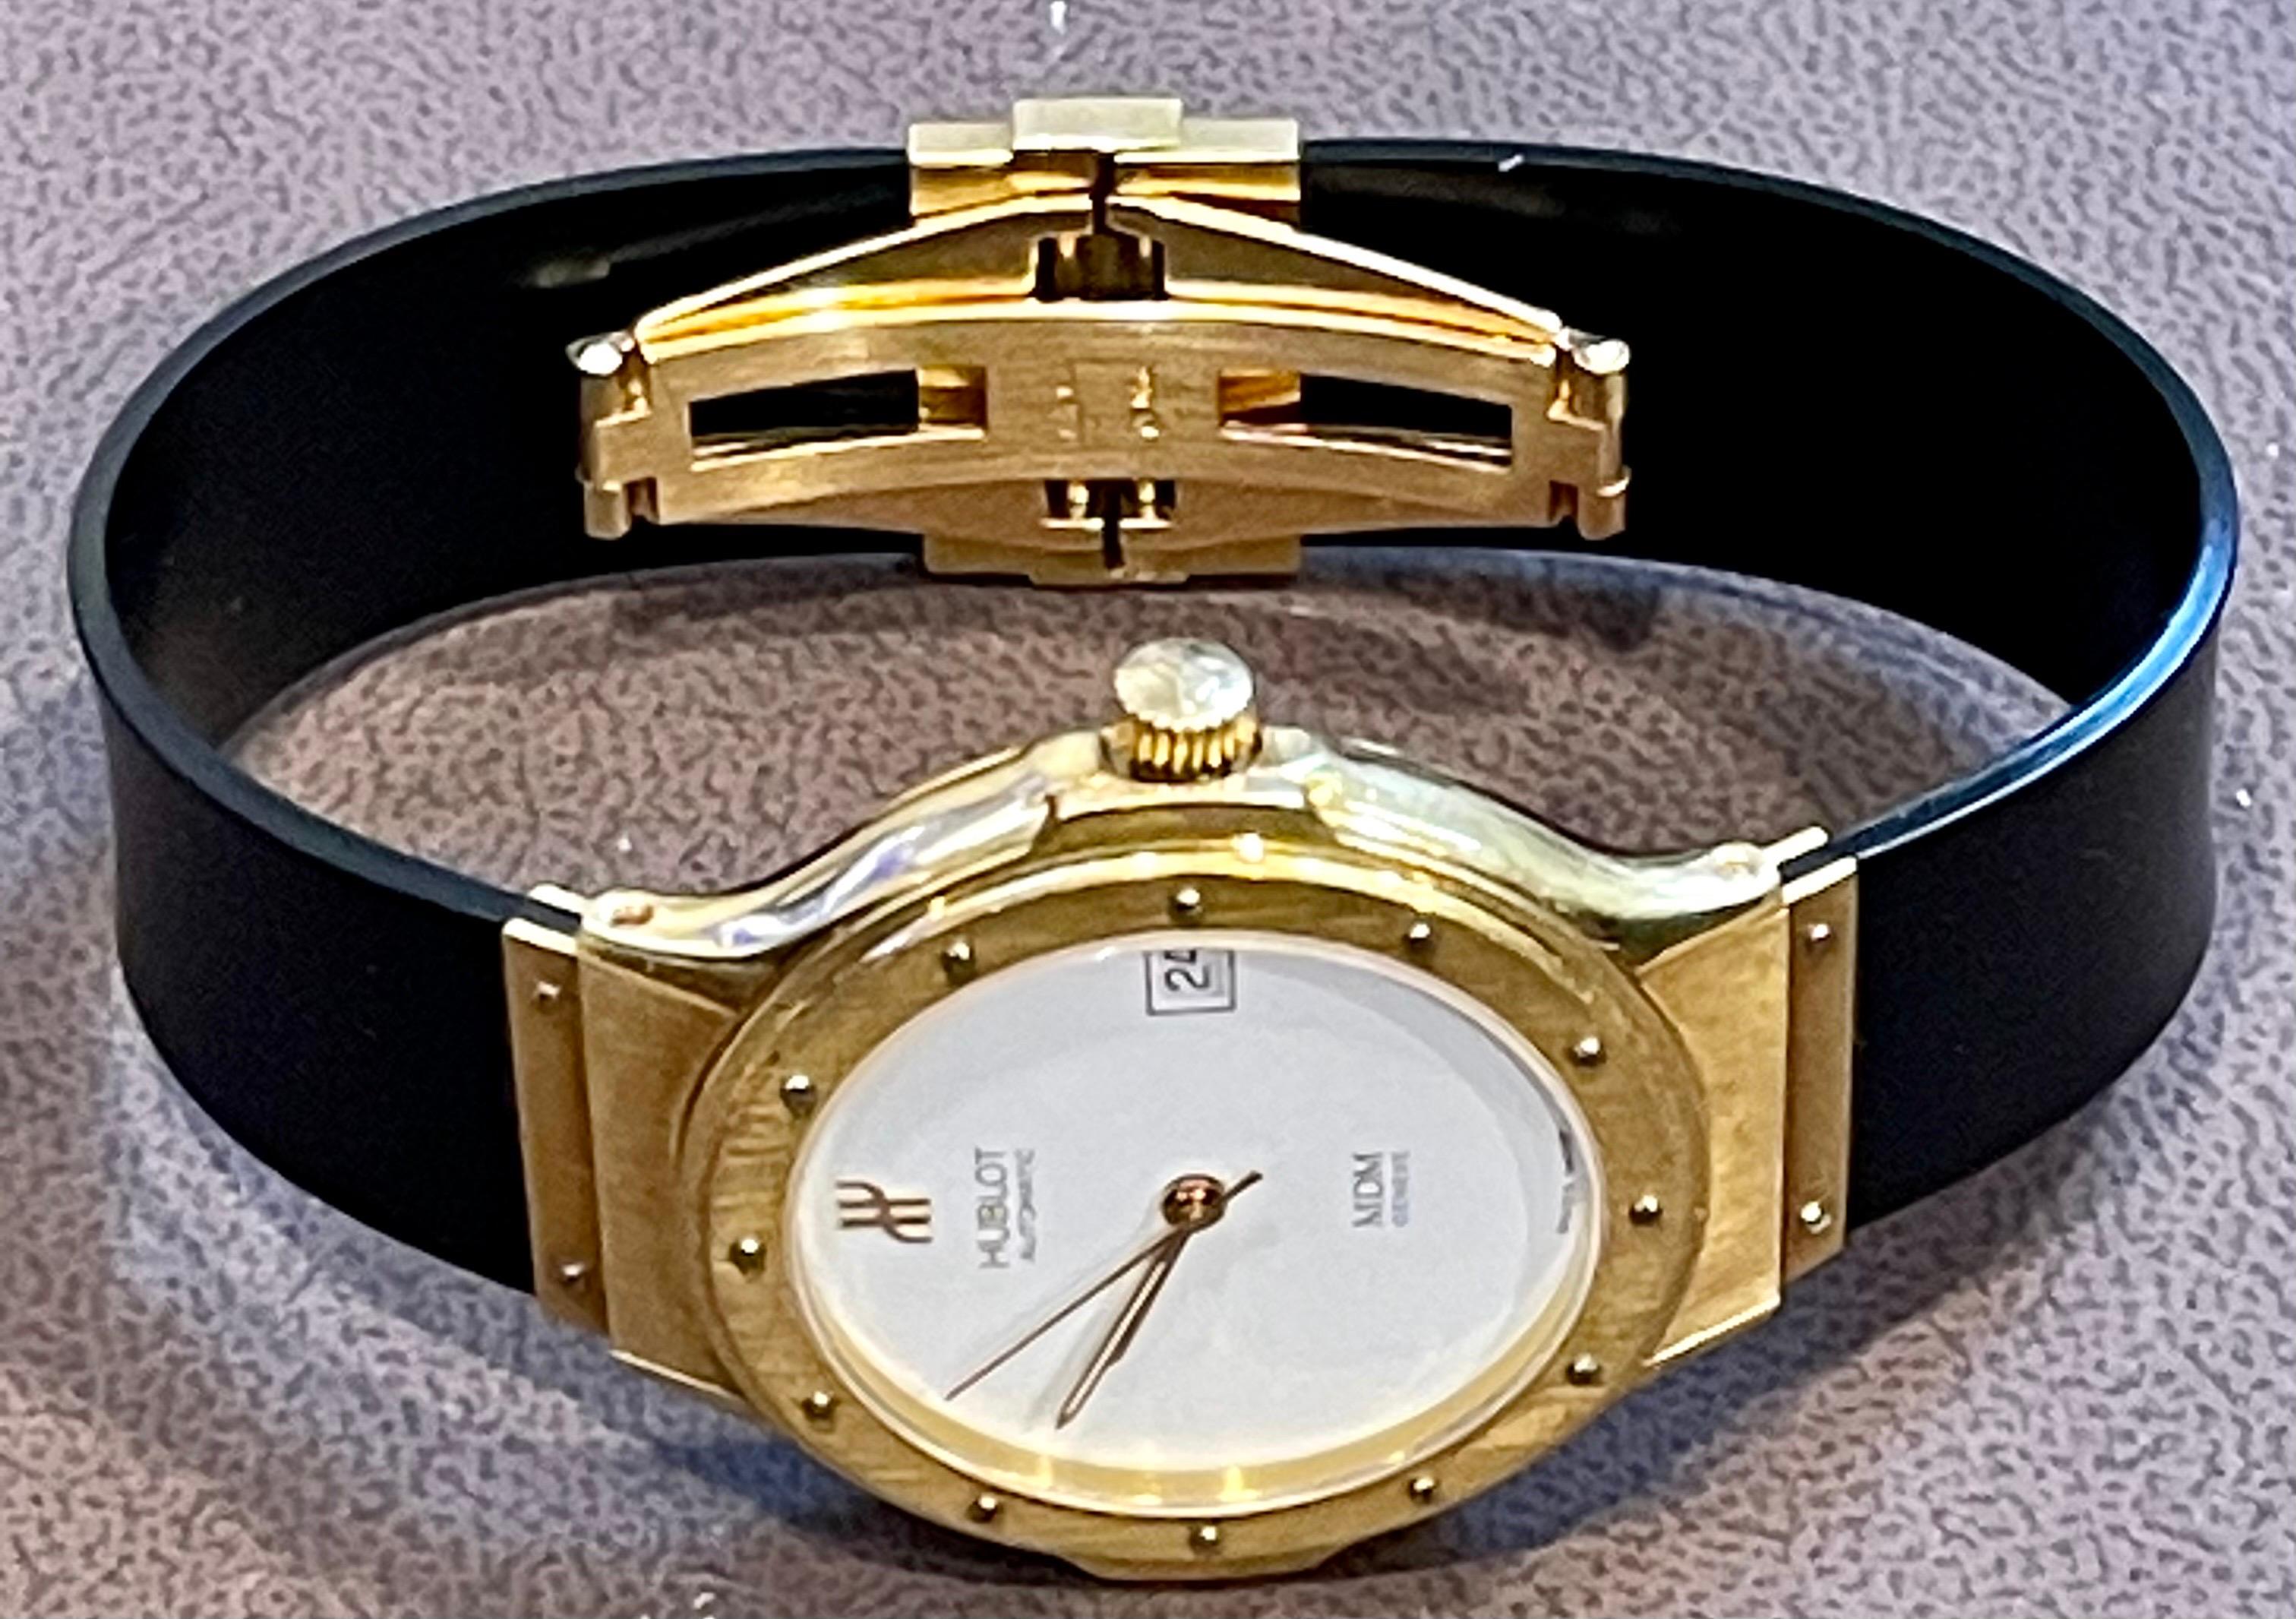 Hublot MDM 1581.3 18 Karat Yellow Gold Unisex Automatic Watch, White Dial For Sale 2